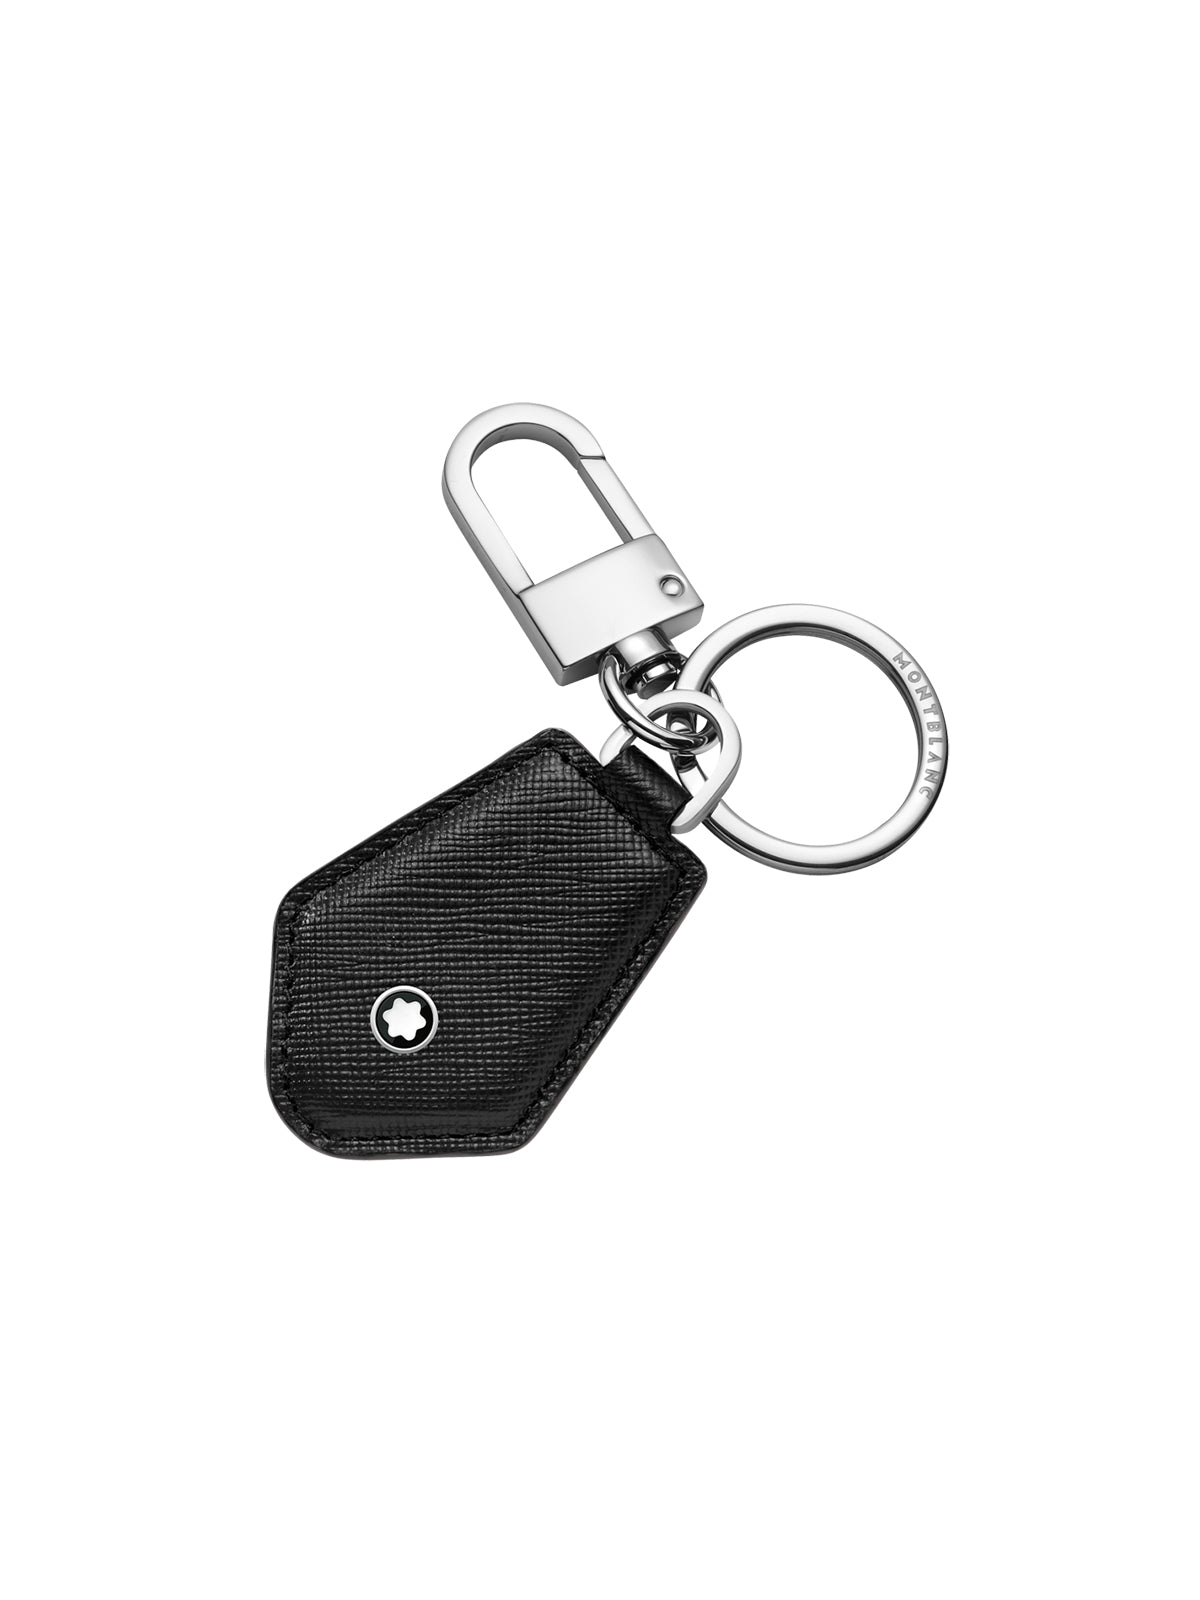 SALE Montblanc Sartorial Key Fob in Black Leather MB128752 *Ex-Display*